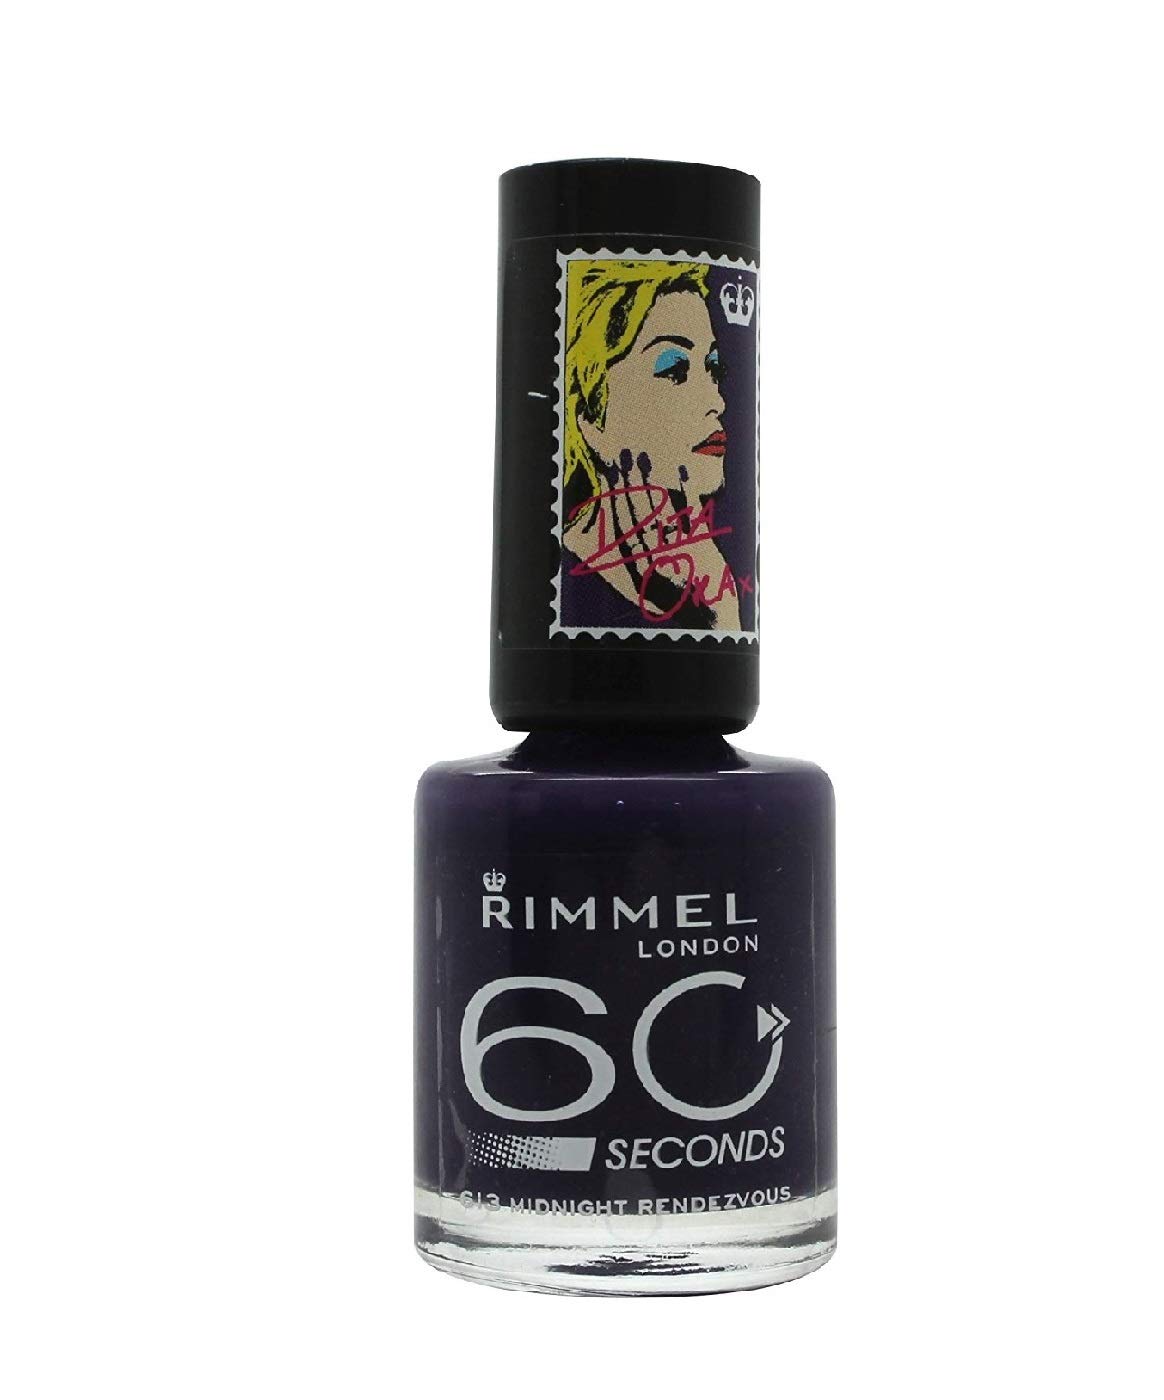 Rimmel 60 Seconds Nagellack by Rita Ora 8ml - Midnight Rendezvous